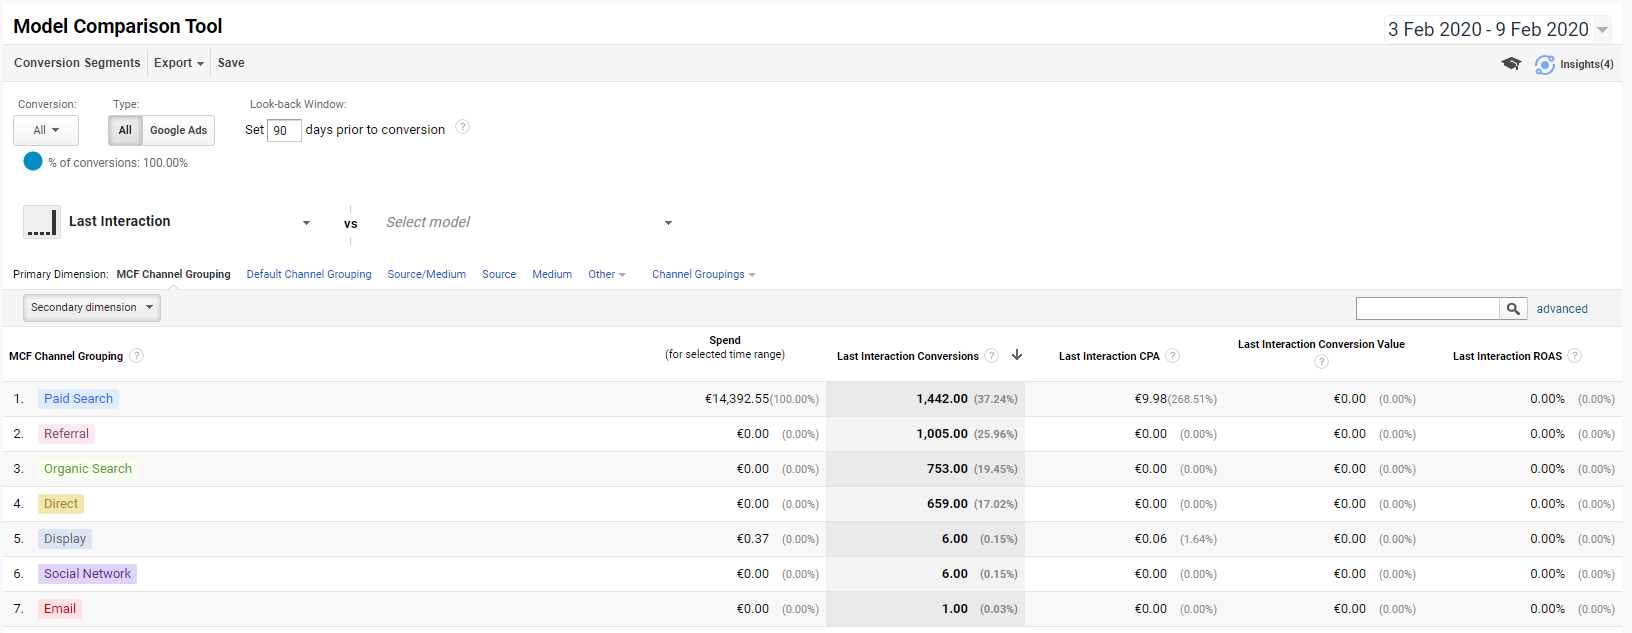 Google Analytics Model Comparison Tool - Last Click